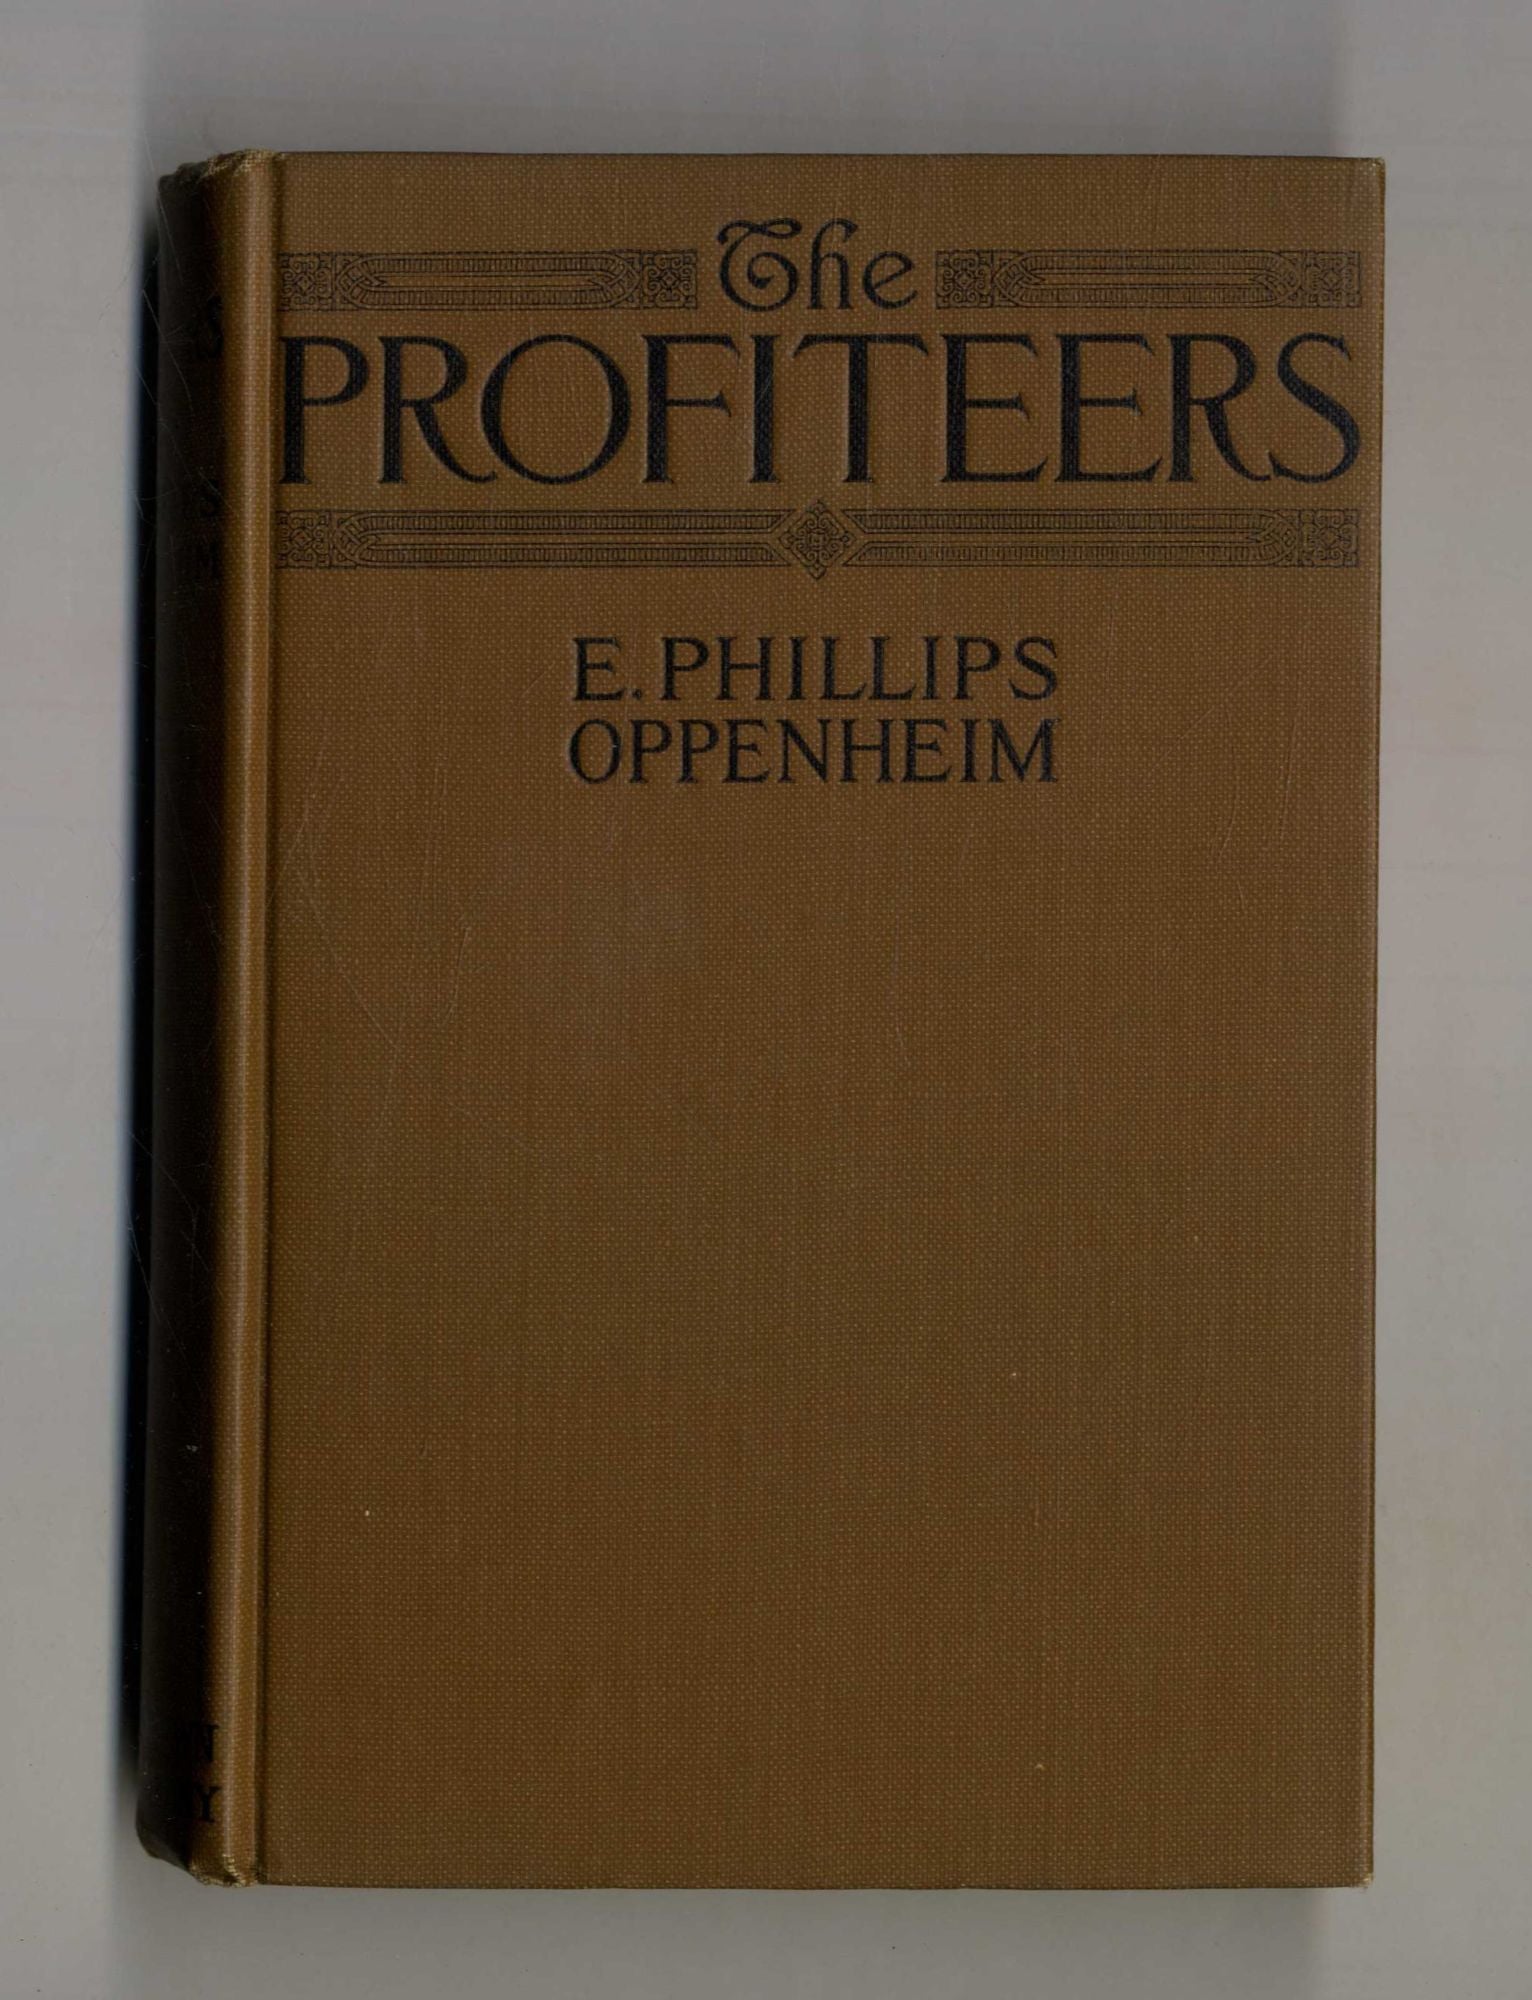 Book #28109 The Profiteers. E. Phillips Oppenheim.